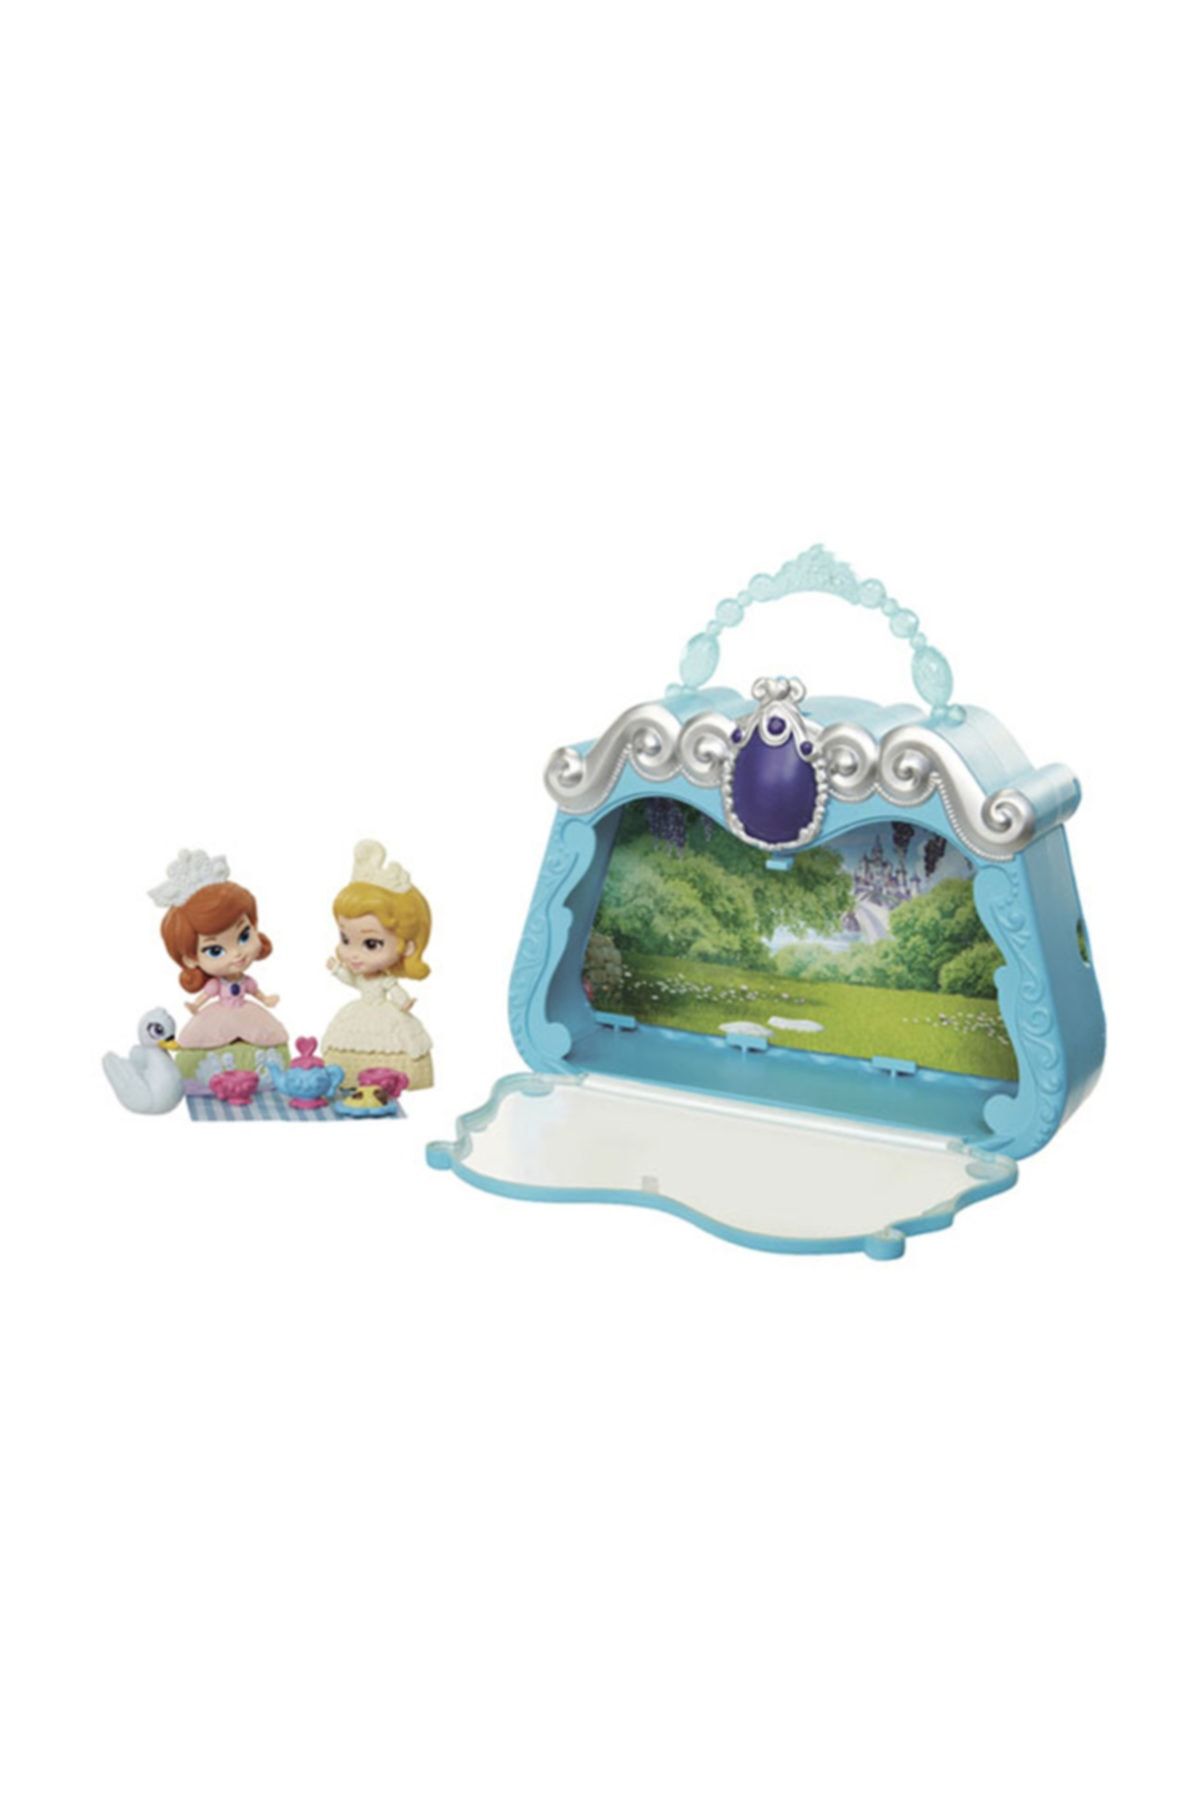 Prenses Sofia Disney Hikaye Temalı Figürlü Set 7598 U260679